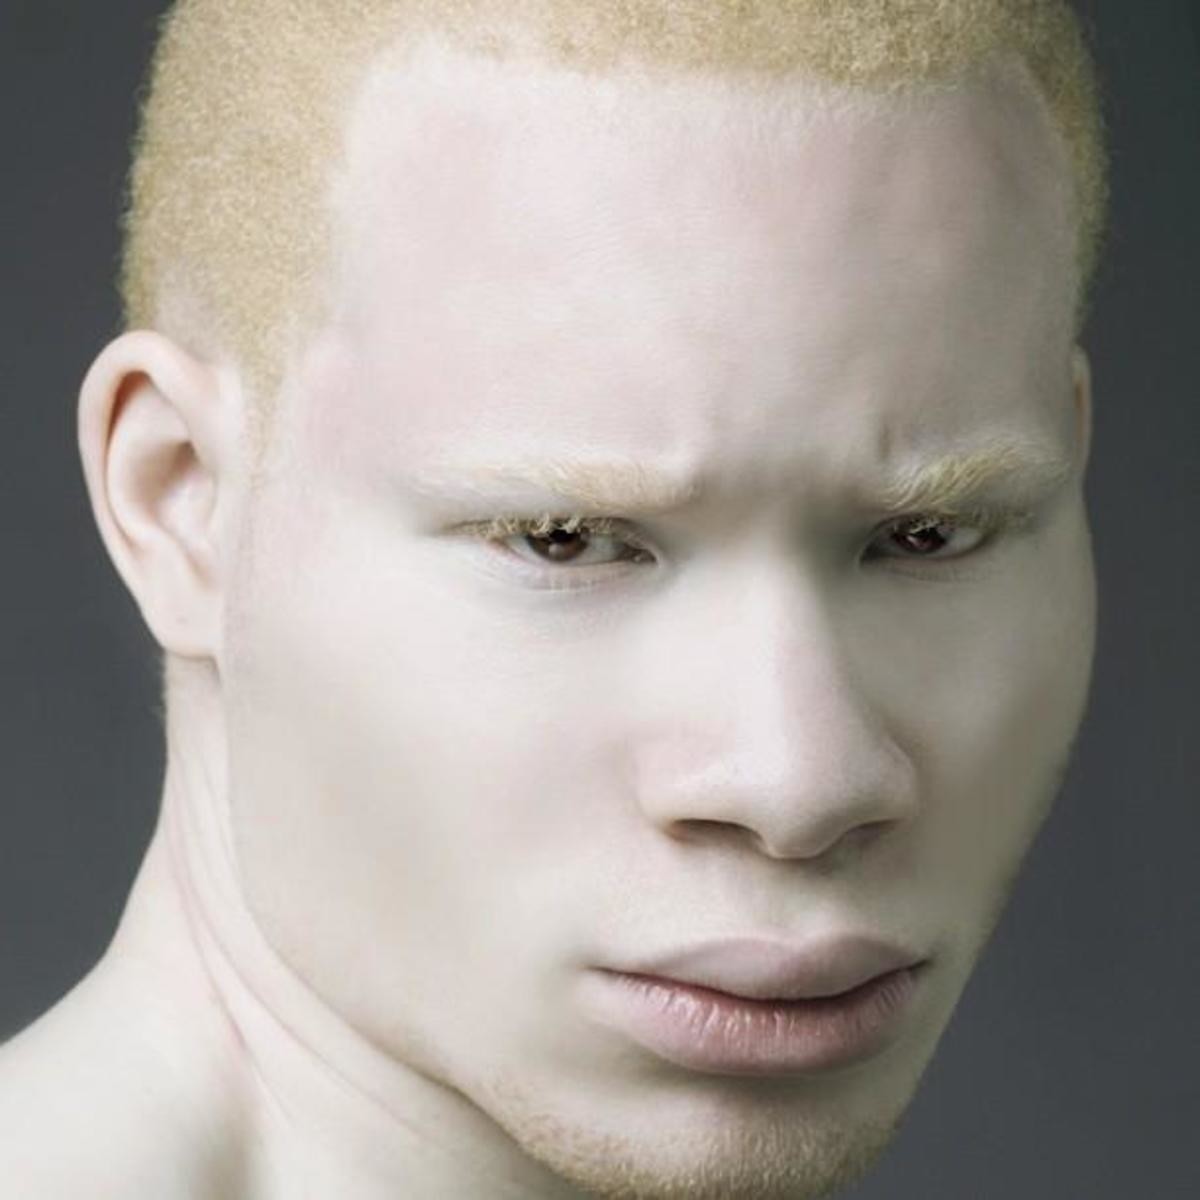 Big albino dick